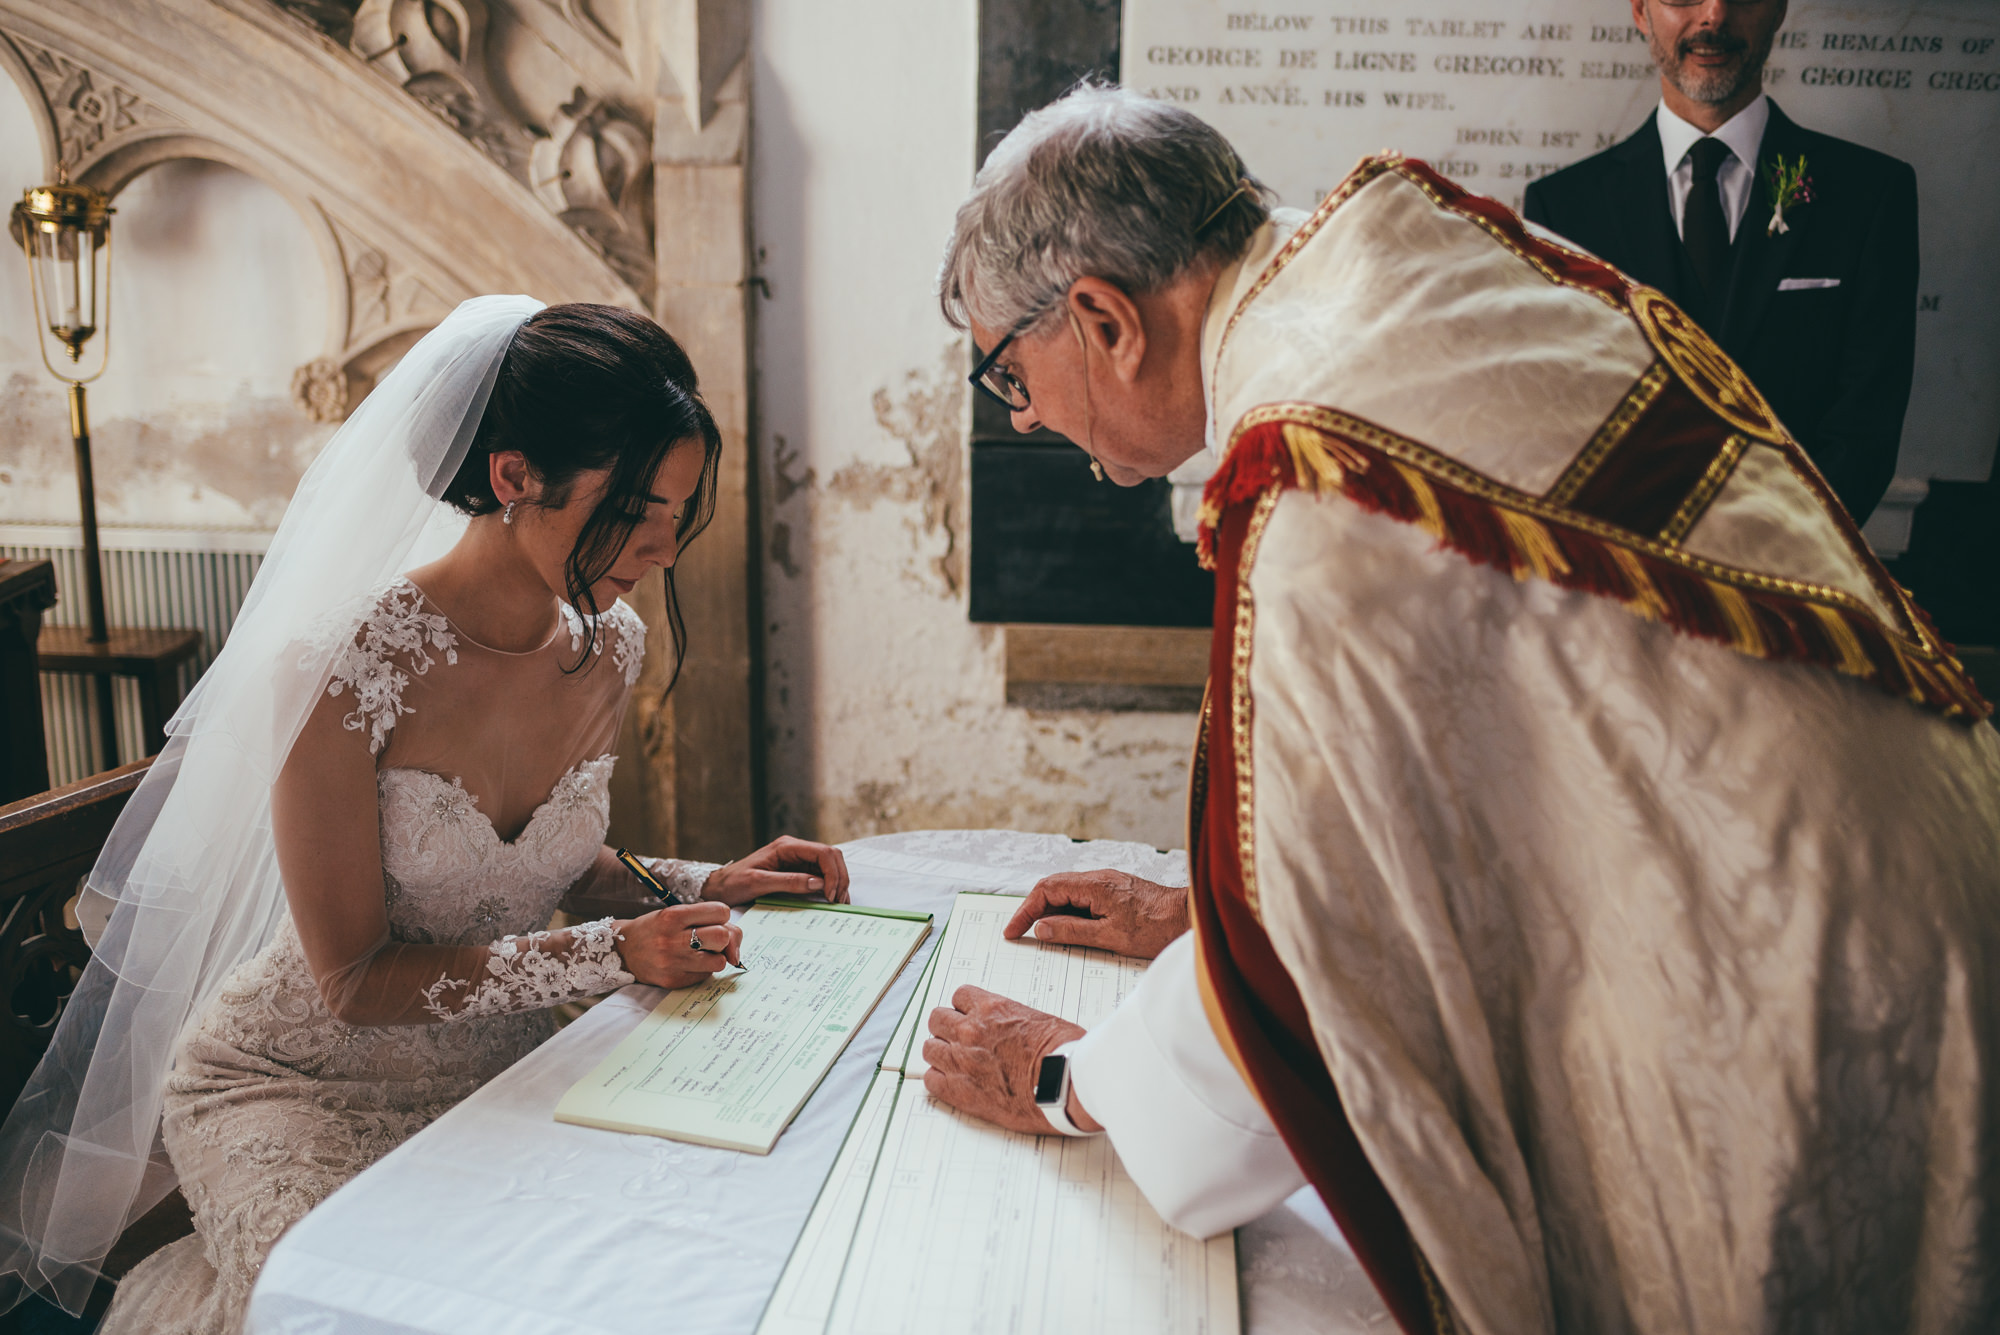 bride signing the wedding register